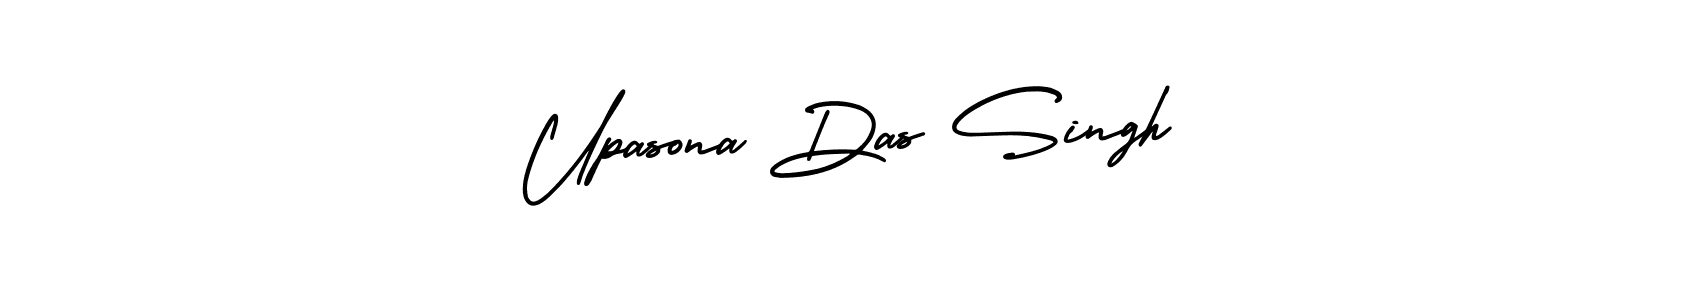 How to Draw Upasona Das Singh signature style? AmerikaSignatureDemo-Regular is a latest design signature styles for name Upasona Das Singh. Upasona Das Singh signature style 3 images and pictures png